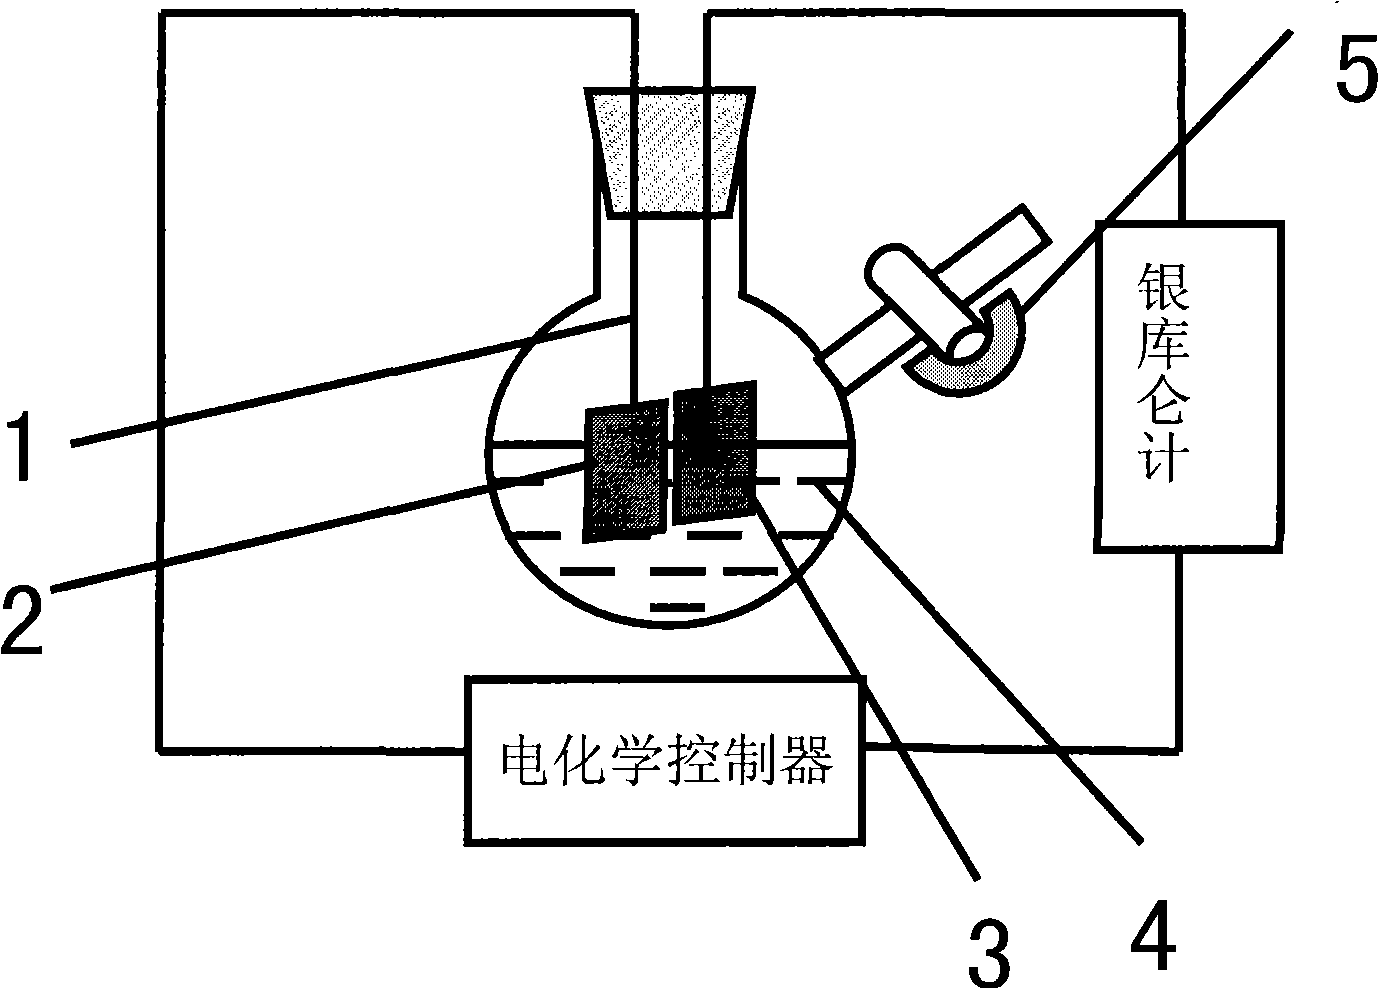 Method for preparing metal complex